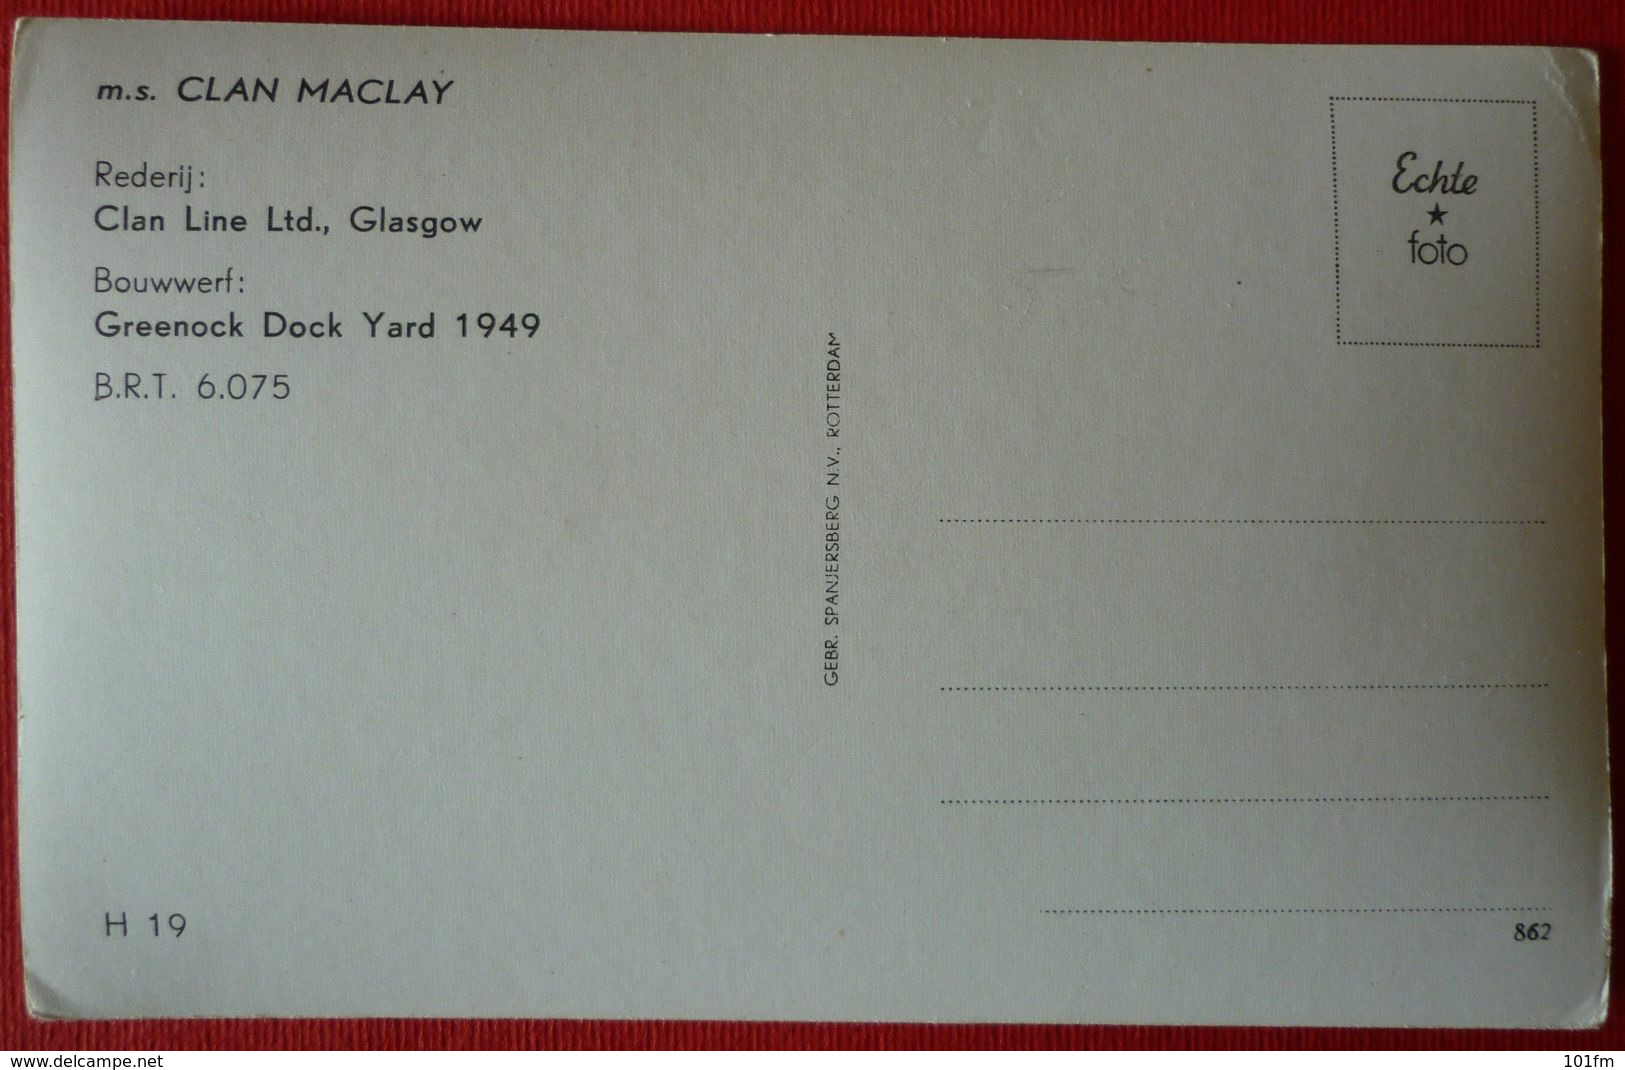 M.V. CLAN MACLAY - CLAN LINE LTD, GLASGOW - Dampfer